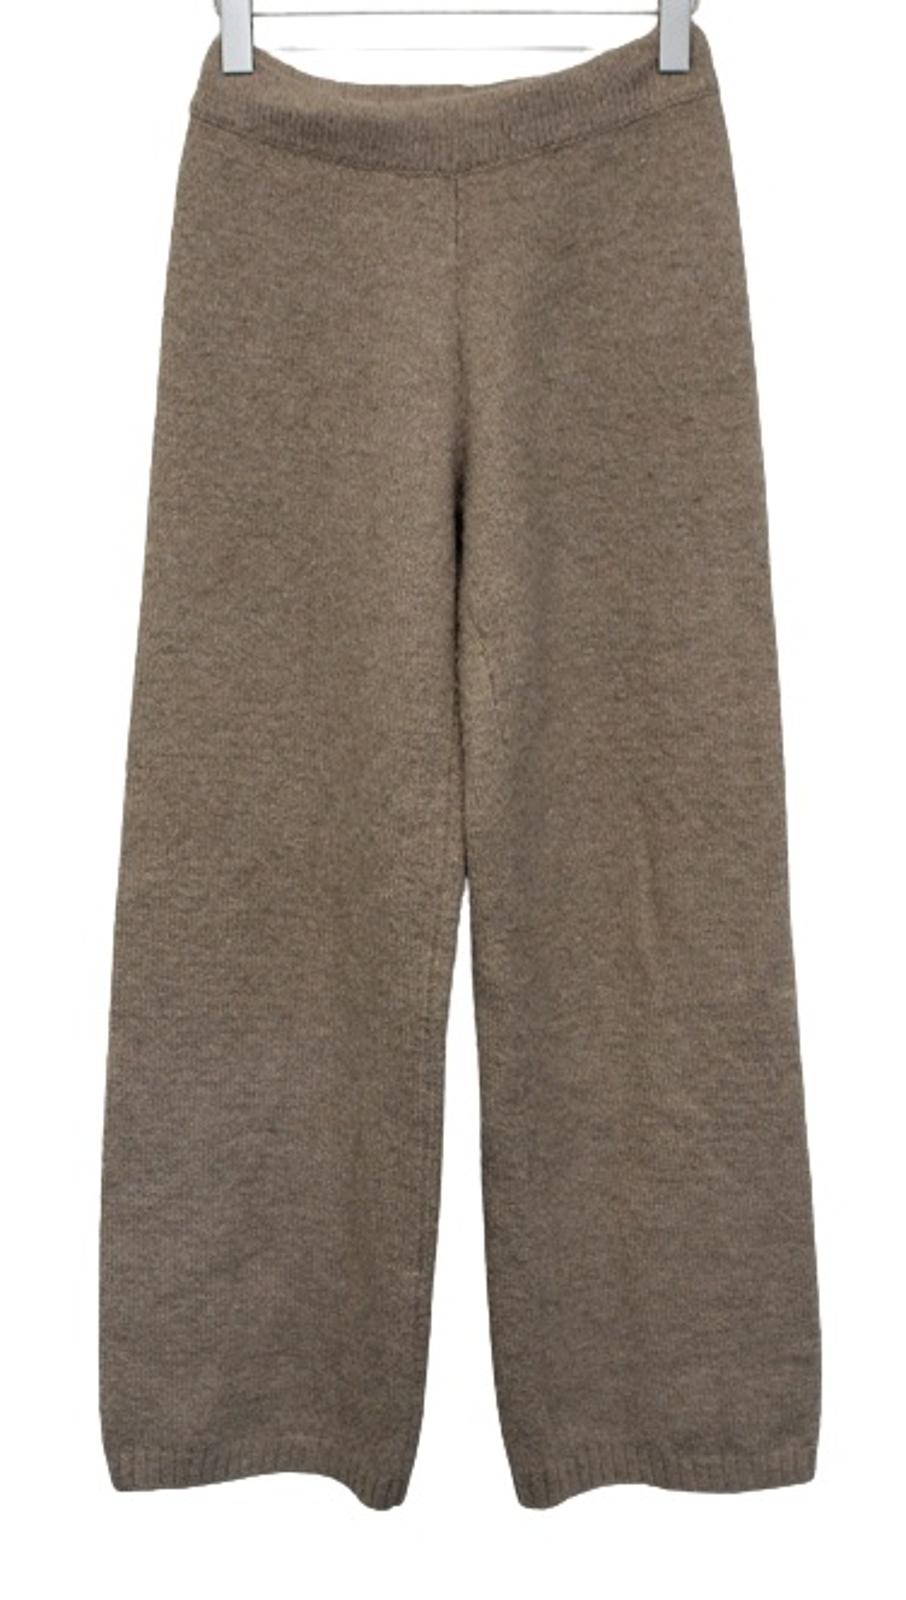 ZARA Ladies Beige Elasticated Waist Knitted Wool Alpaca Mix Trousers S W26 L31